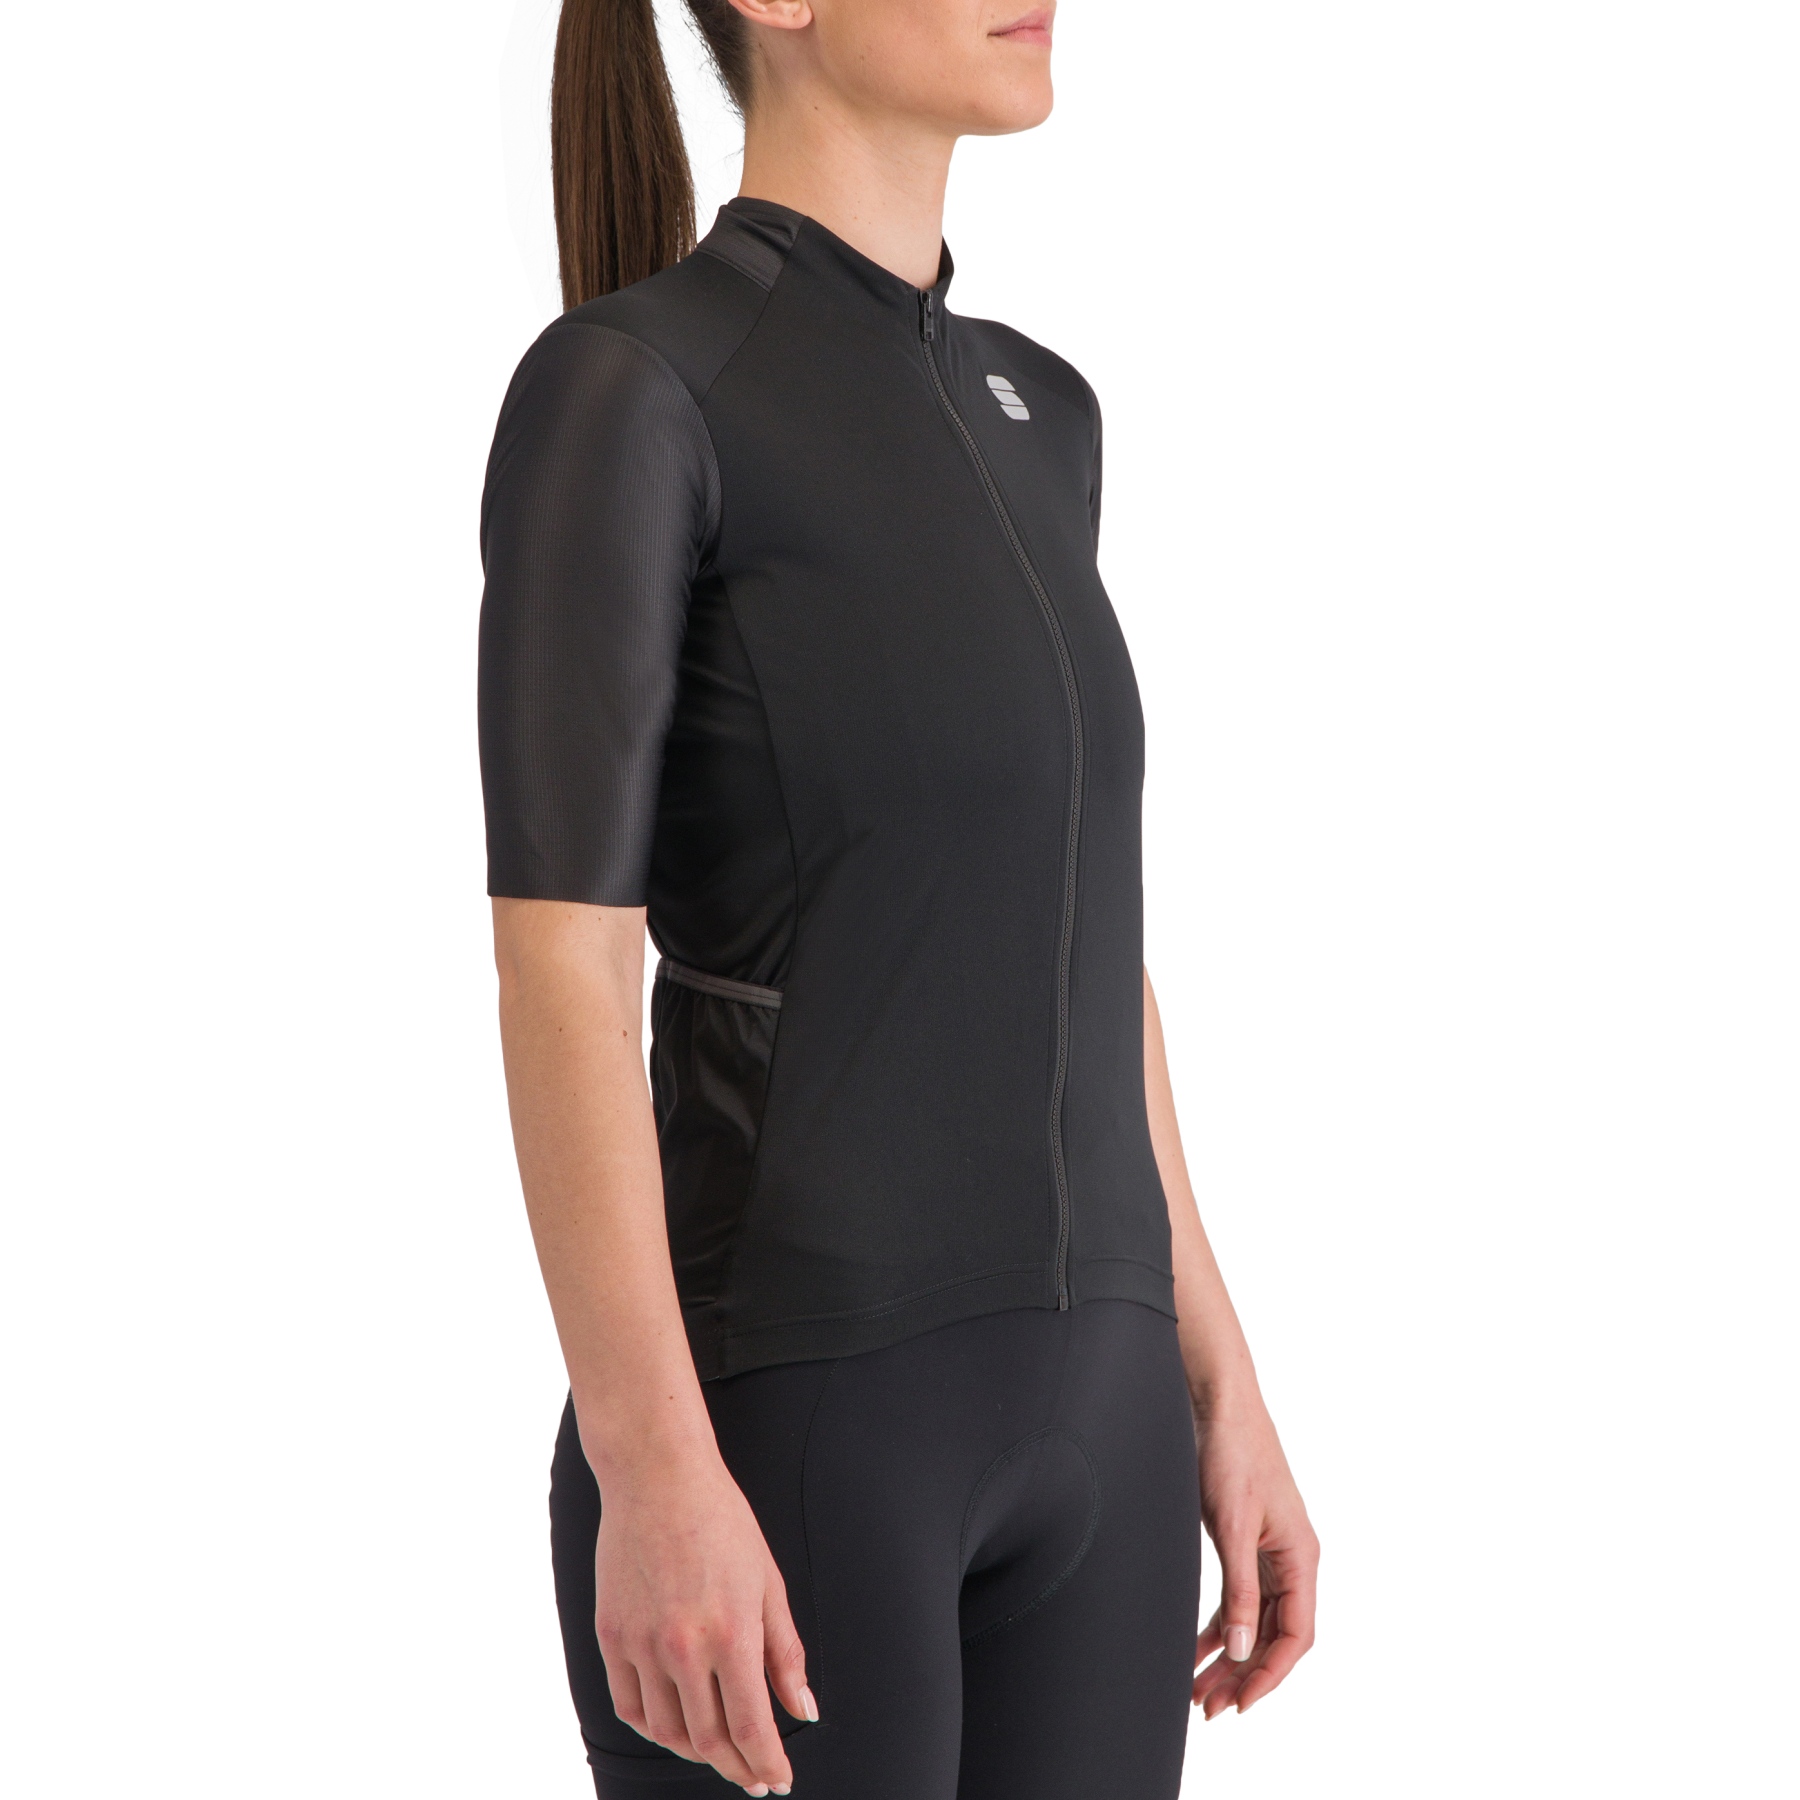 Productfoto van Sportful Supergiara Fietsshirt Dames - 002 Zwart